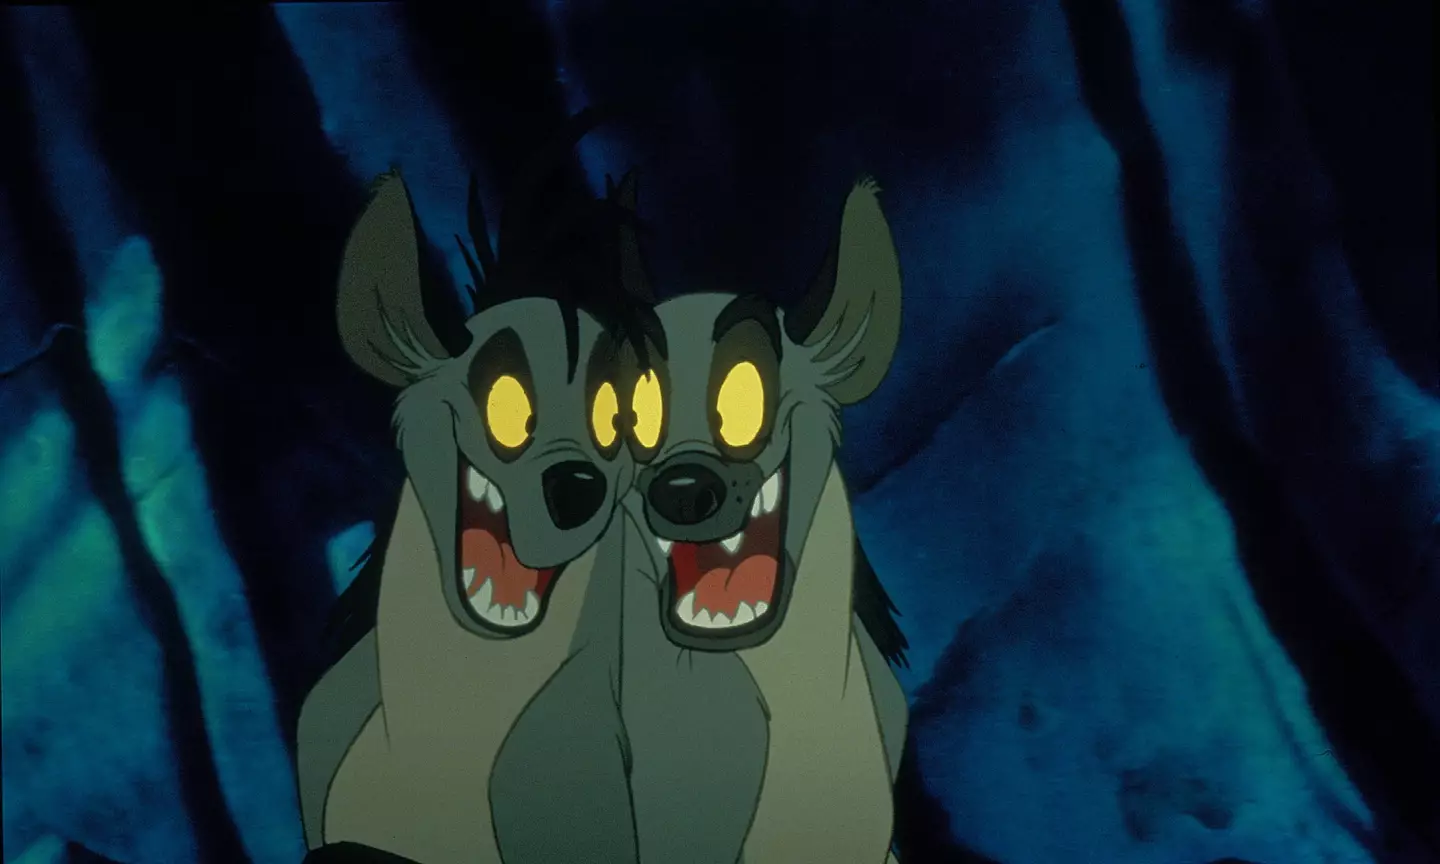 The original ending sees Scar eaten by the hyenas.